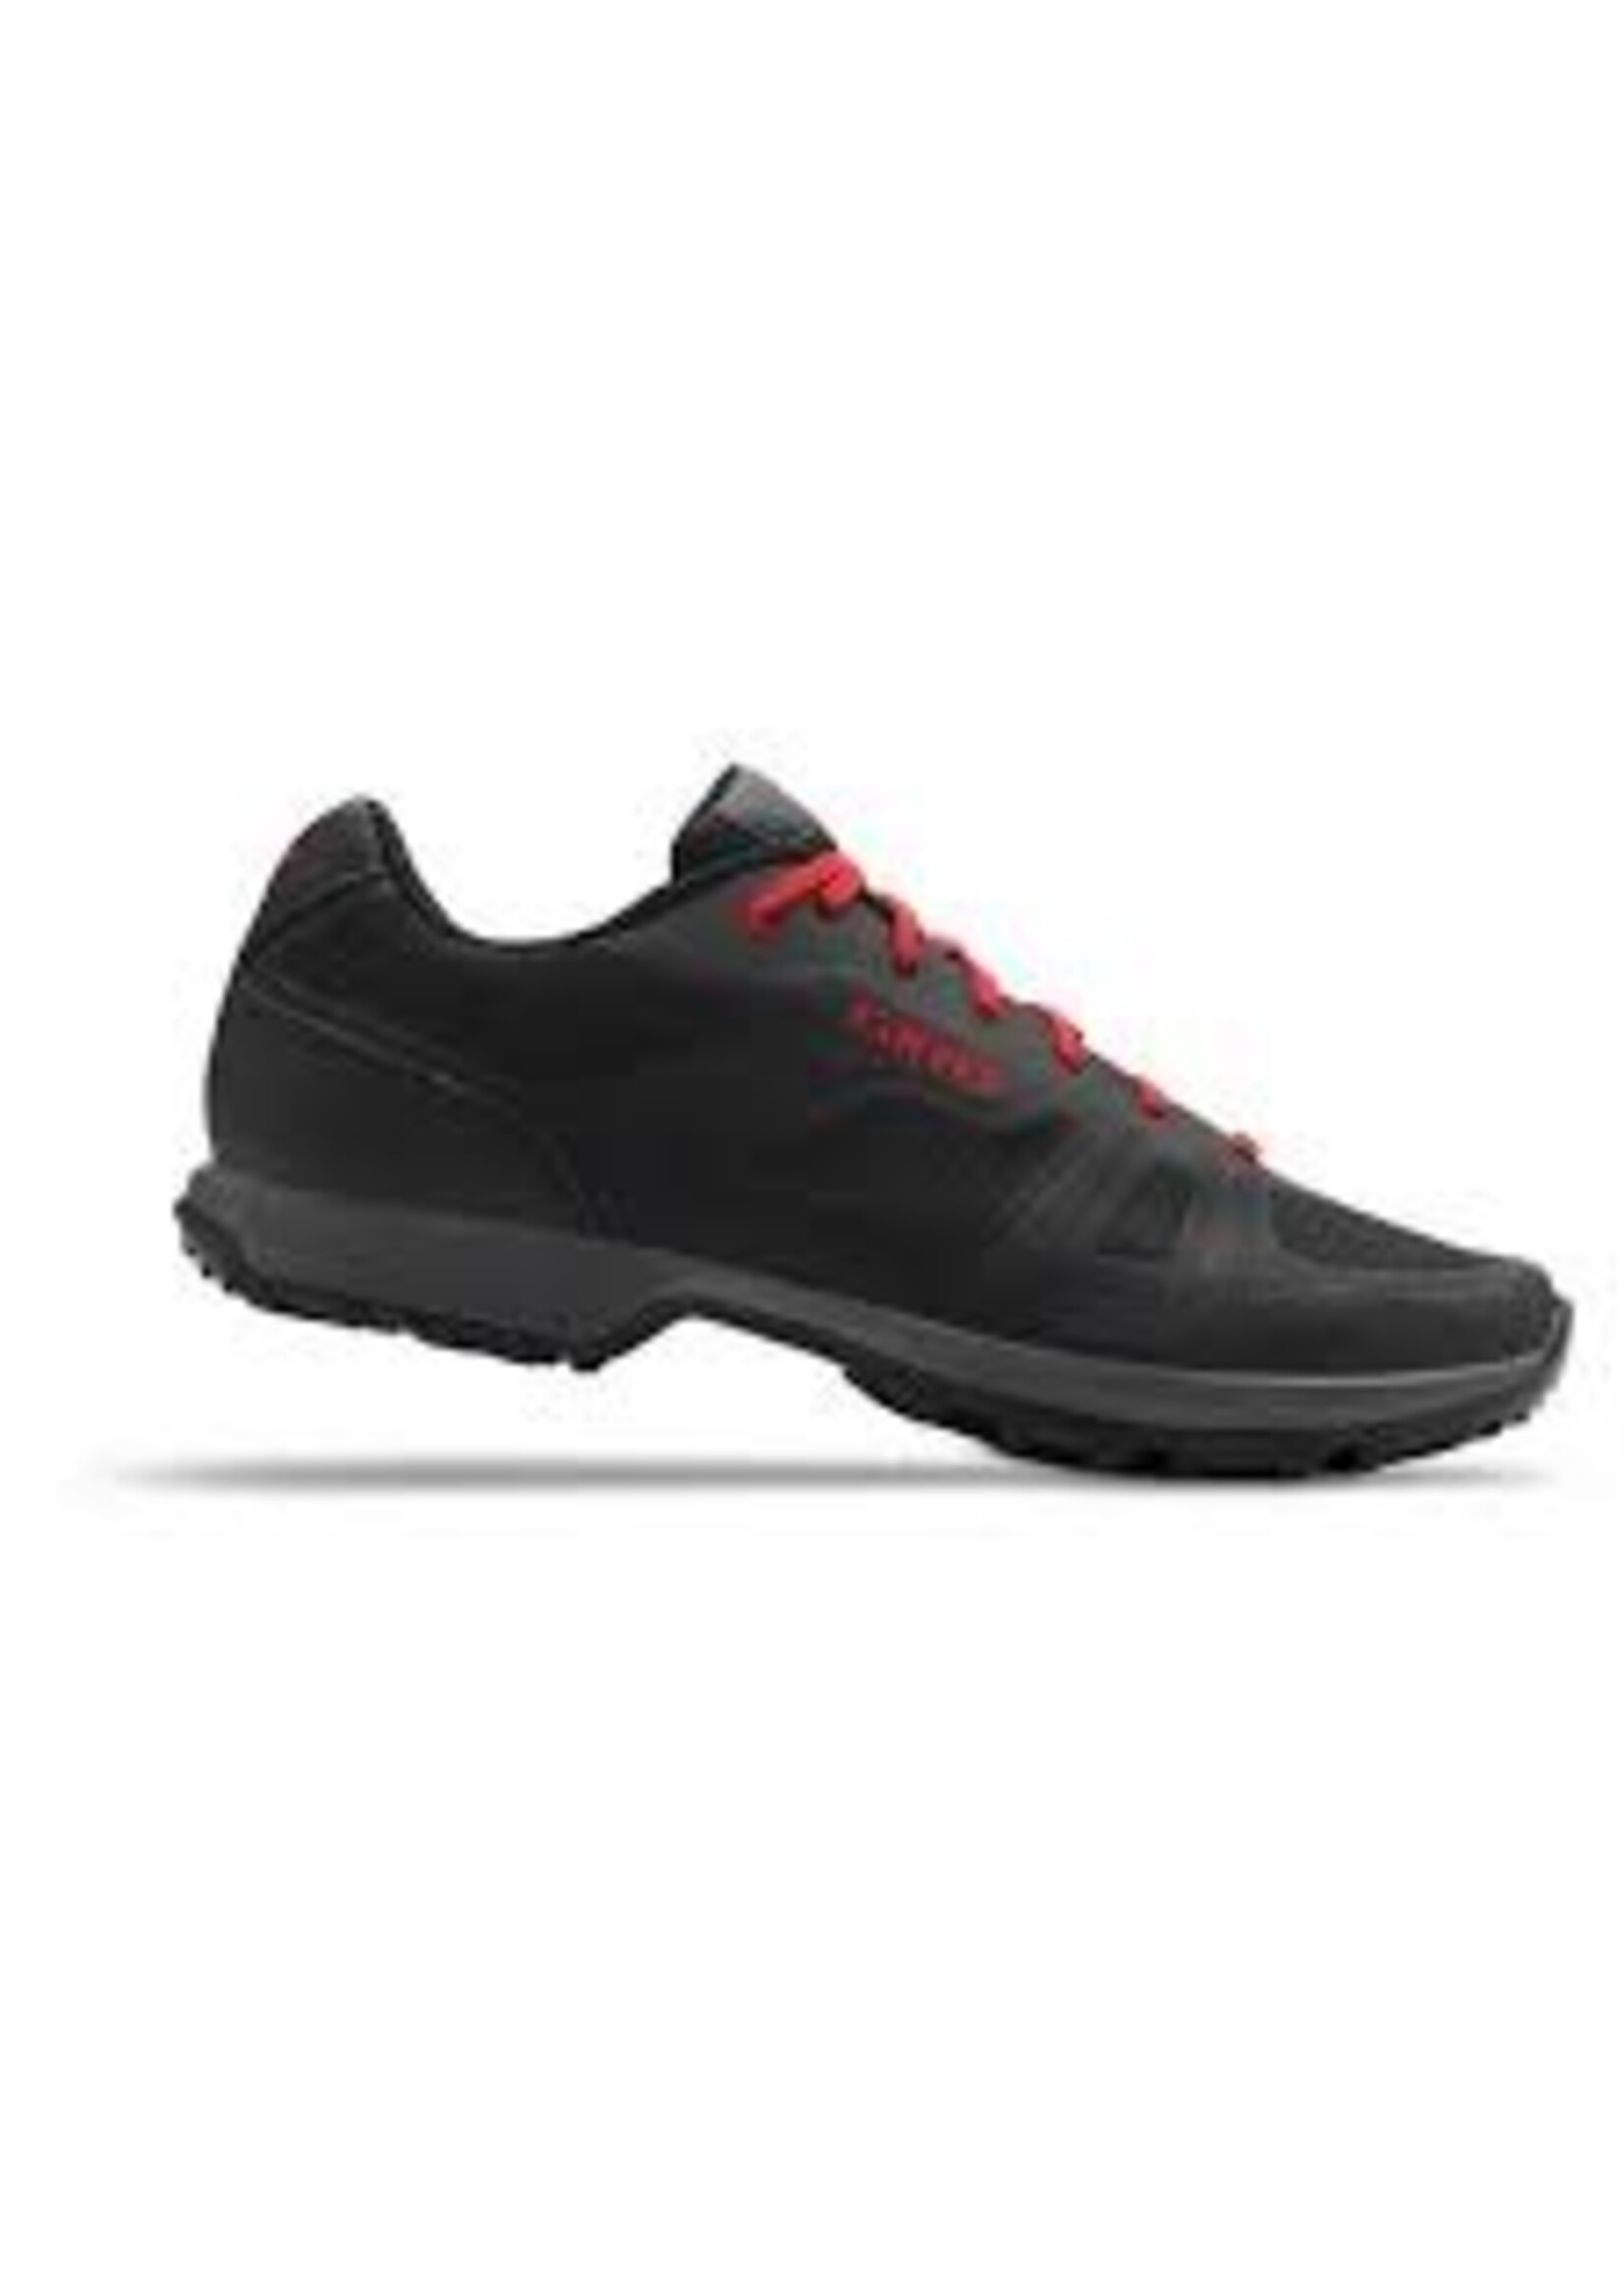 GIRO Chaussures  Giro Gauge noir/rouge M 46